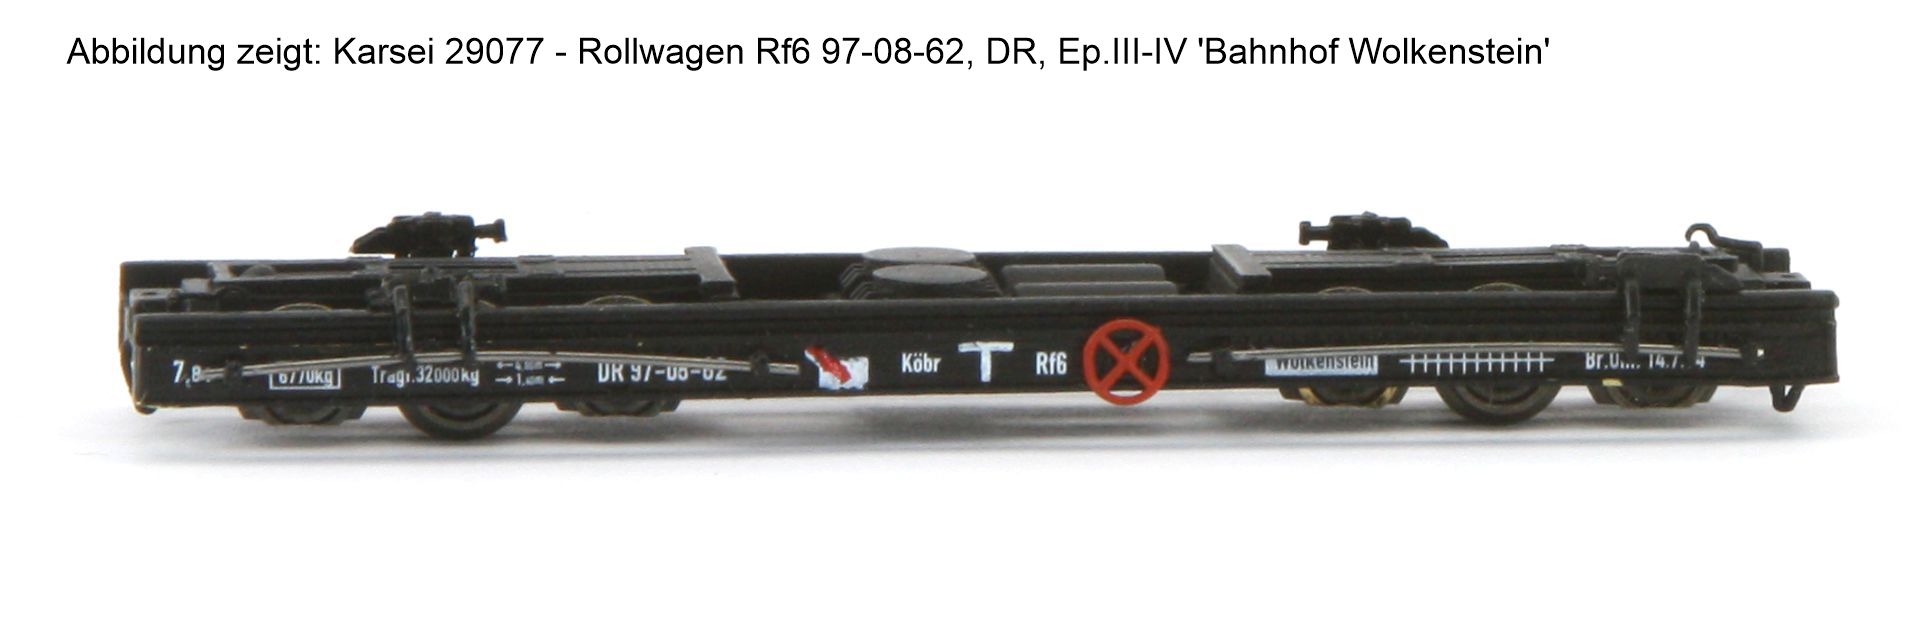 Karsei 29076 - Rollwagen Rf6 97-09-08, DR, Ep.III-IV 'Bahnhof Radebeul'